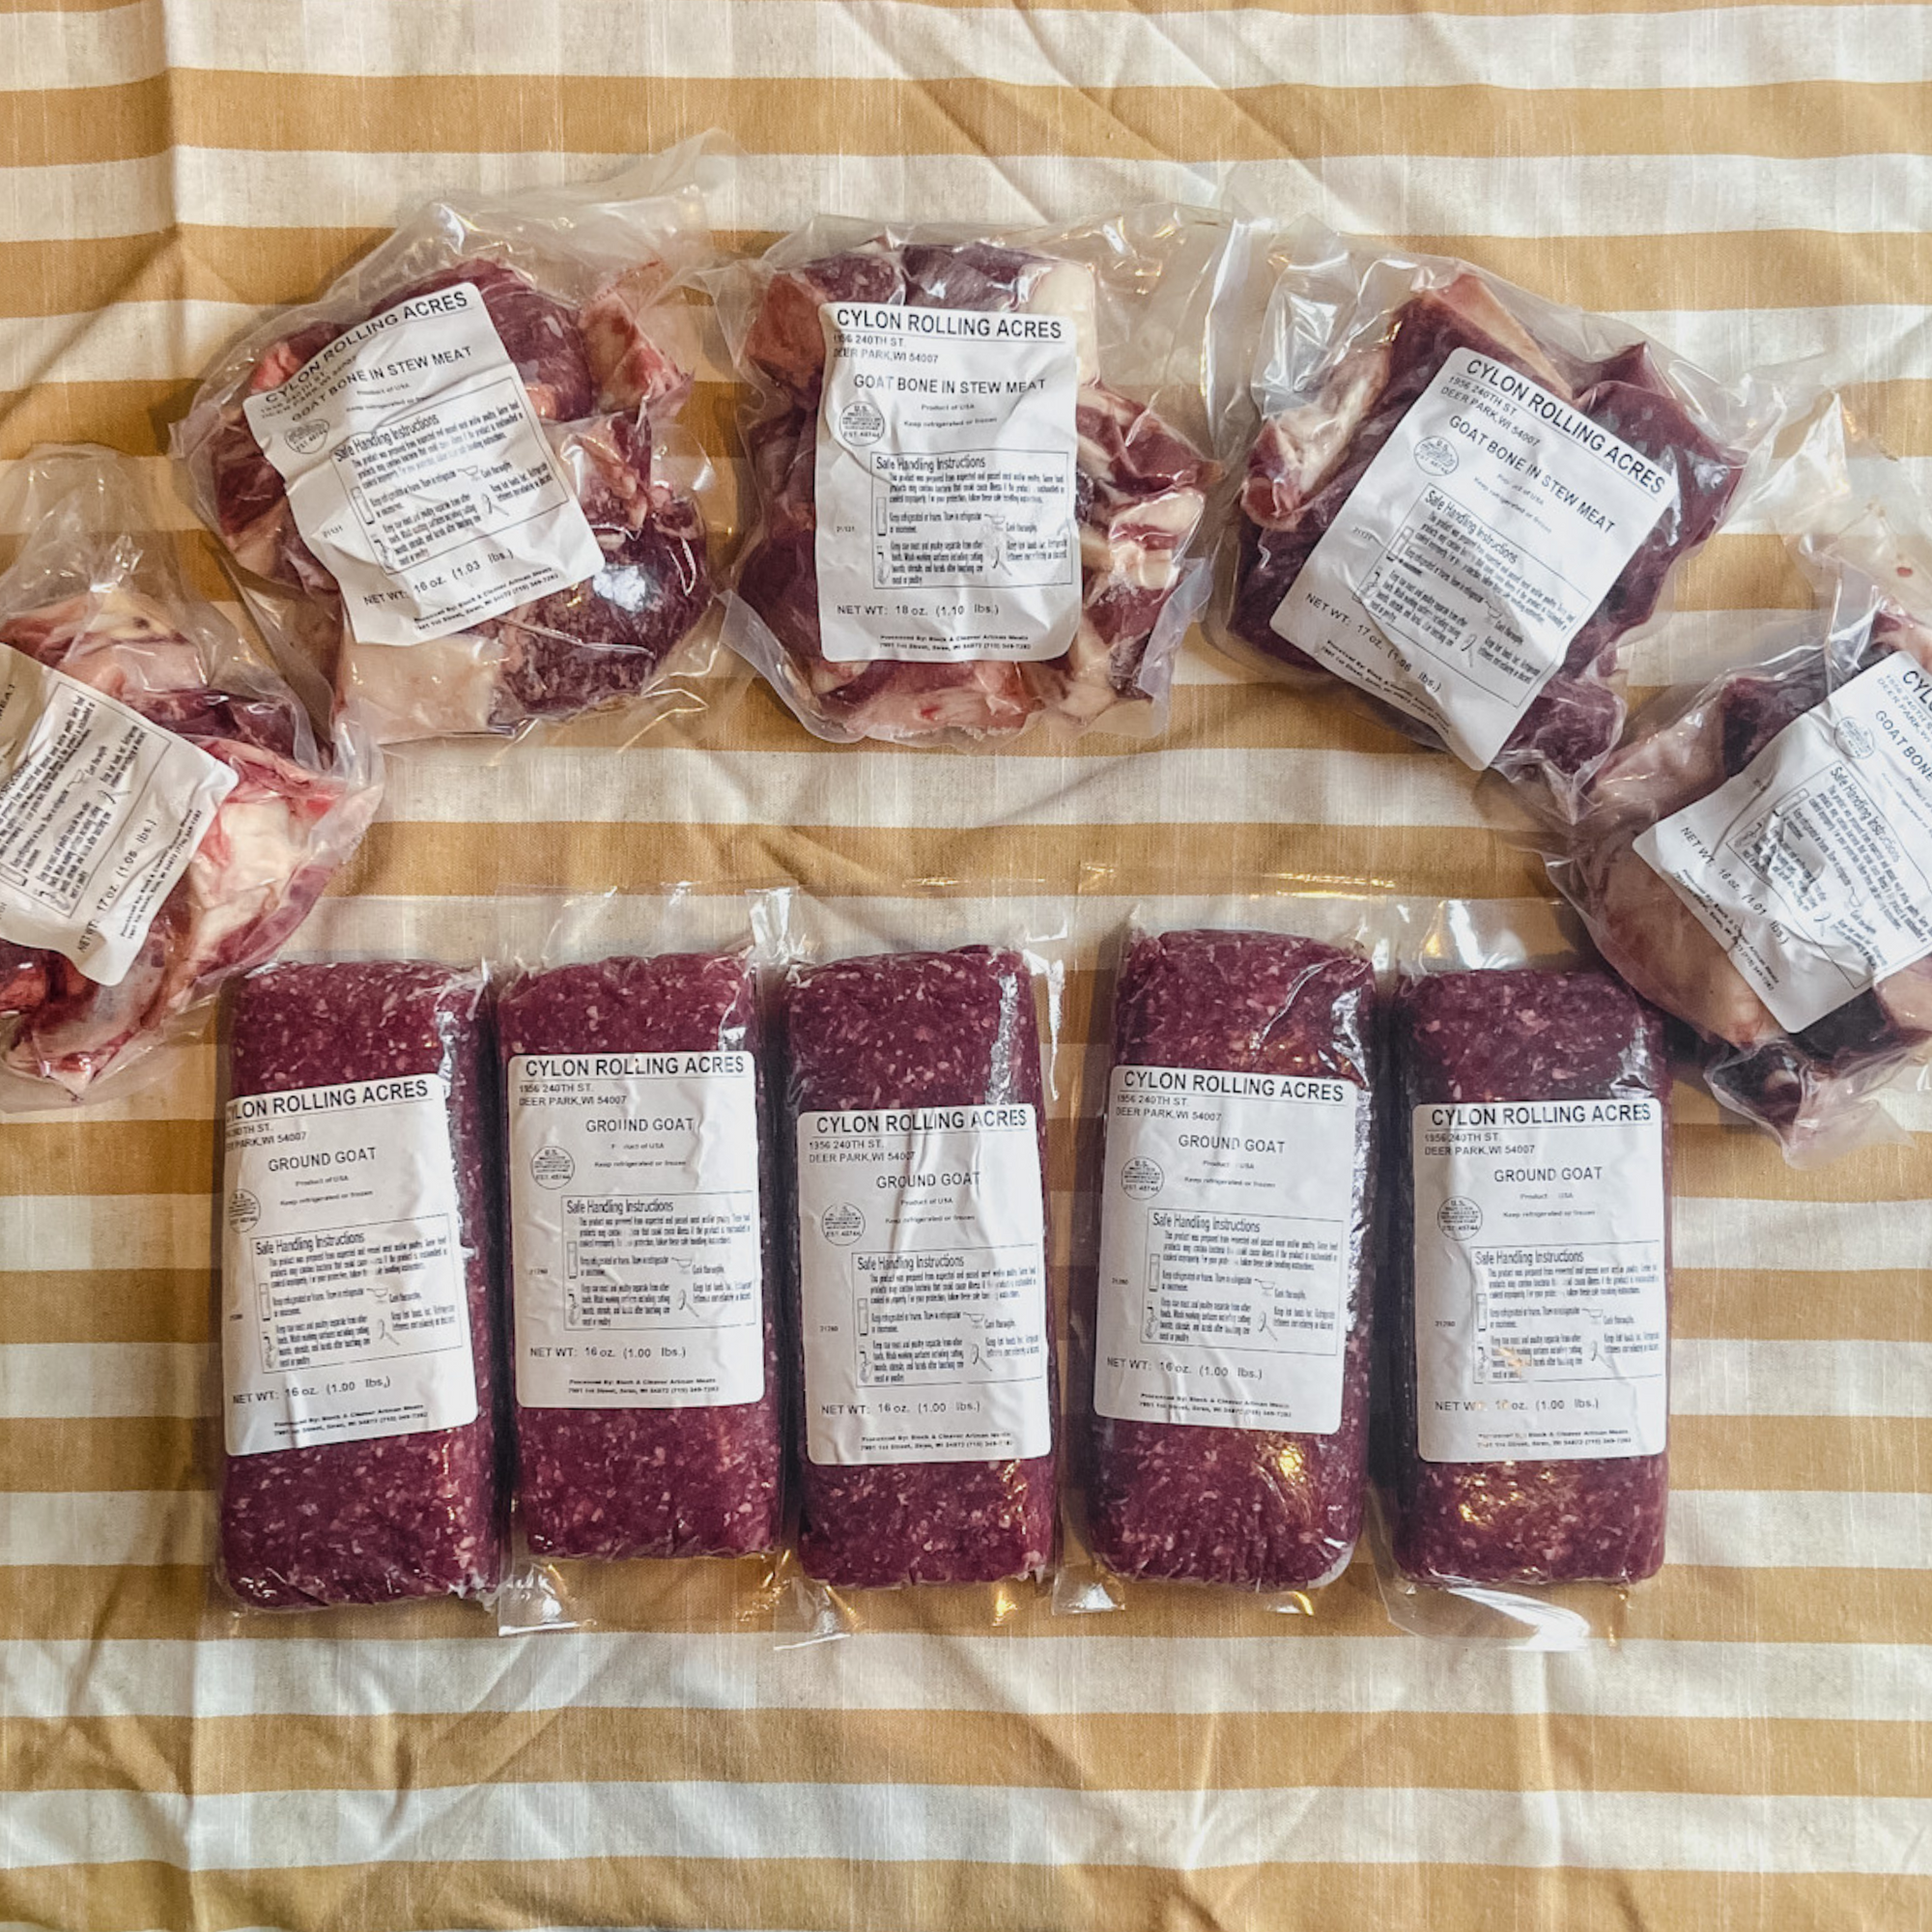 Bundle of goat meat cuts.